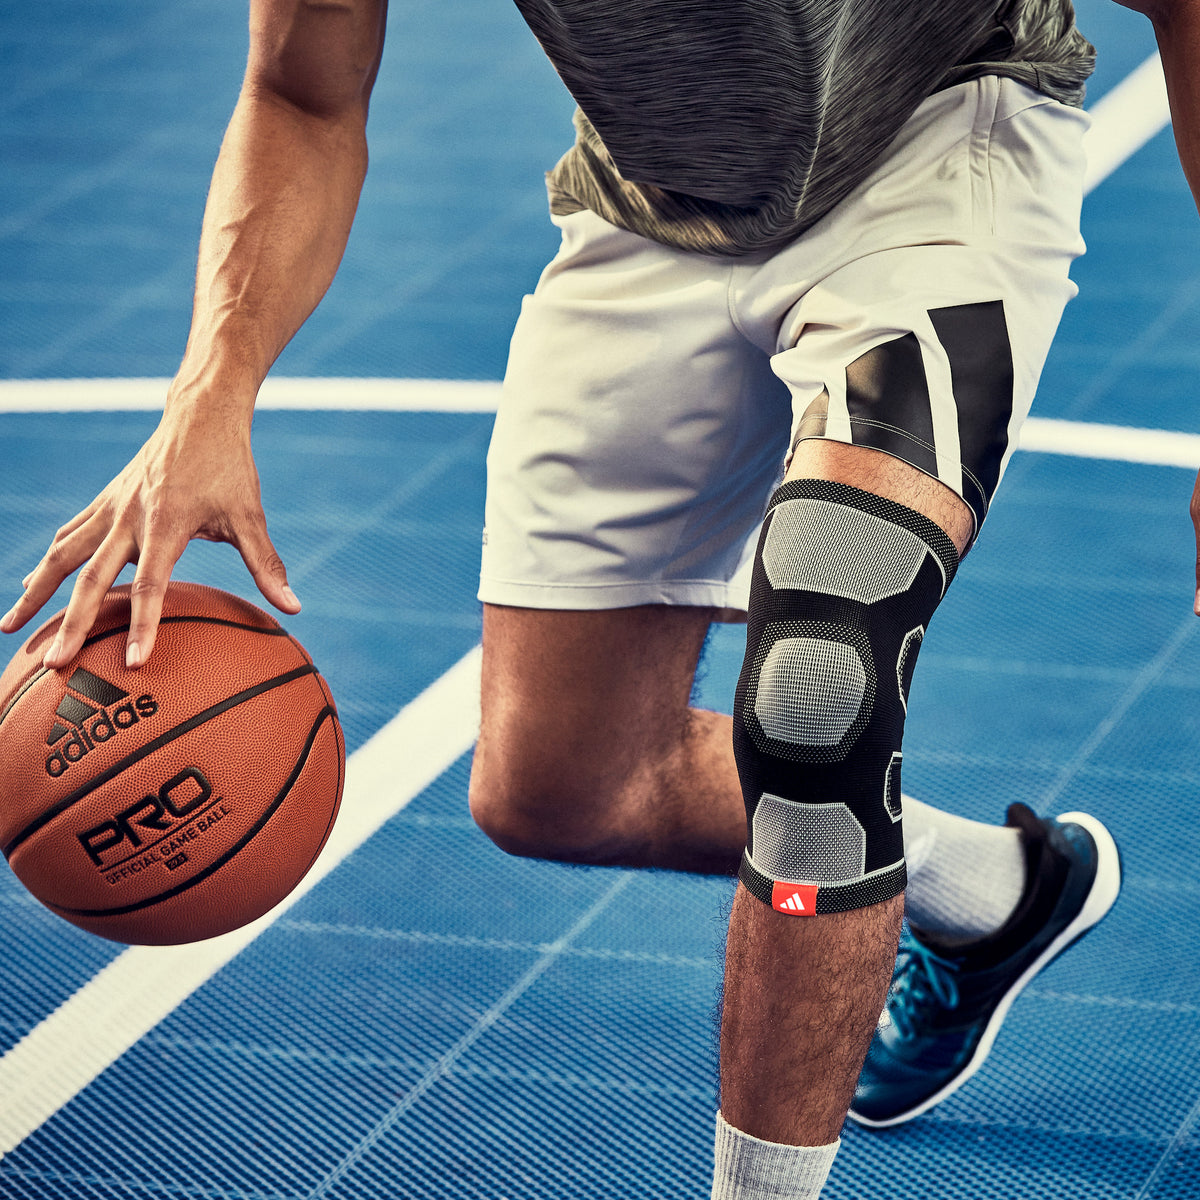 adias Premium Knee Support on man playing basketball